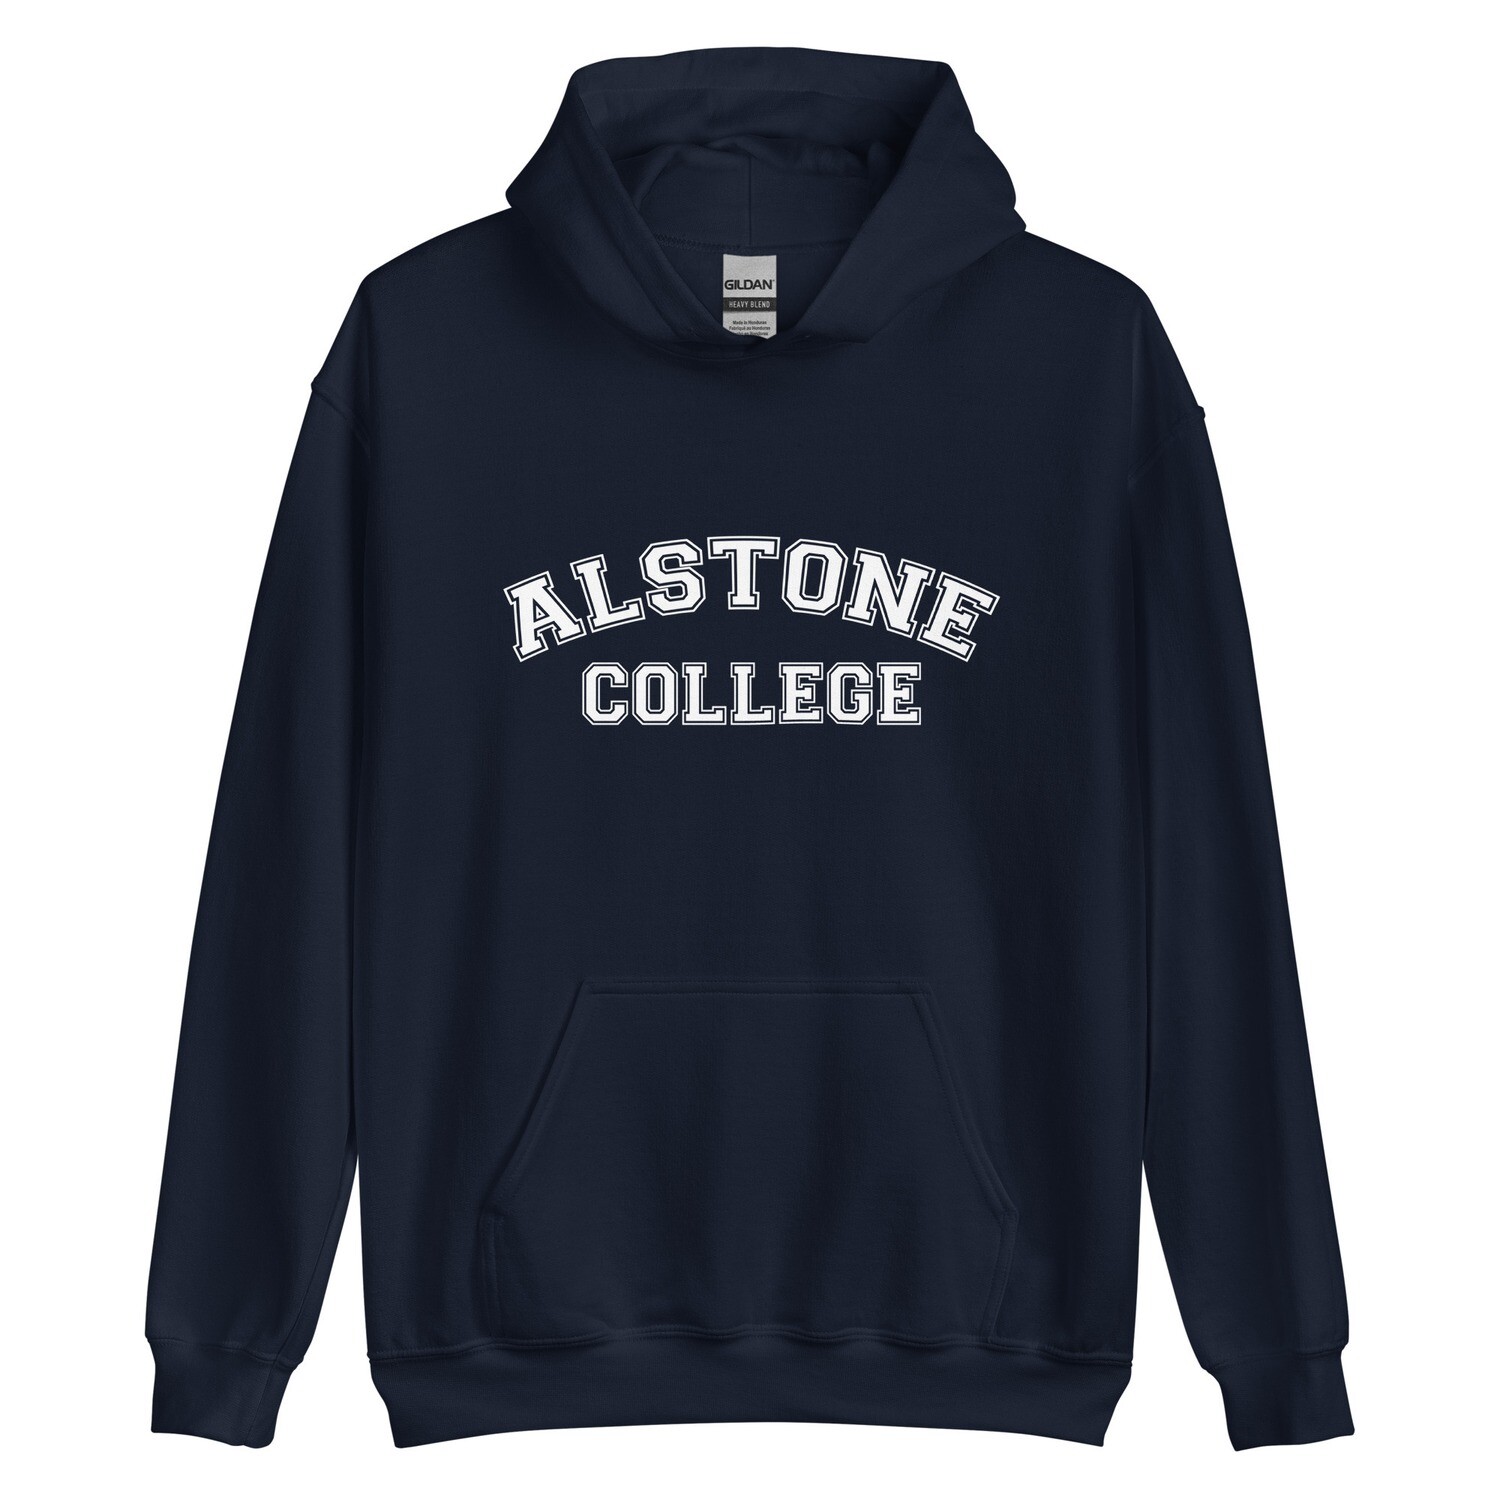 Alstone College Hoodie